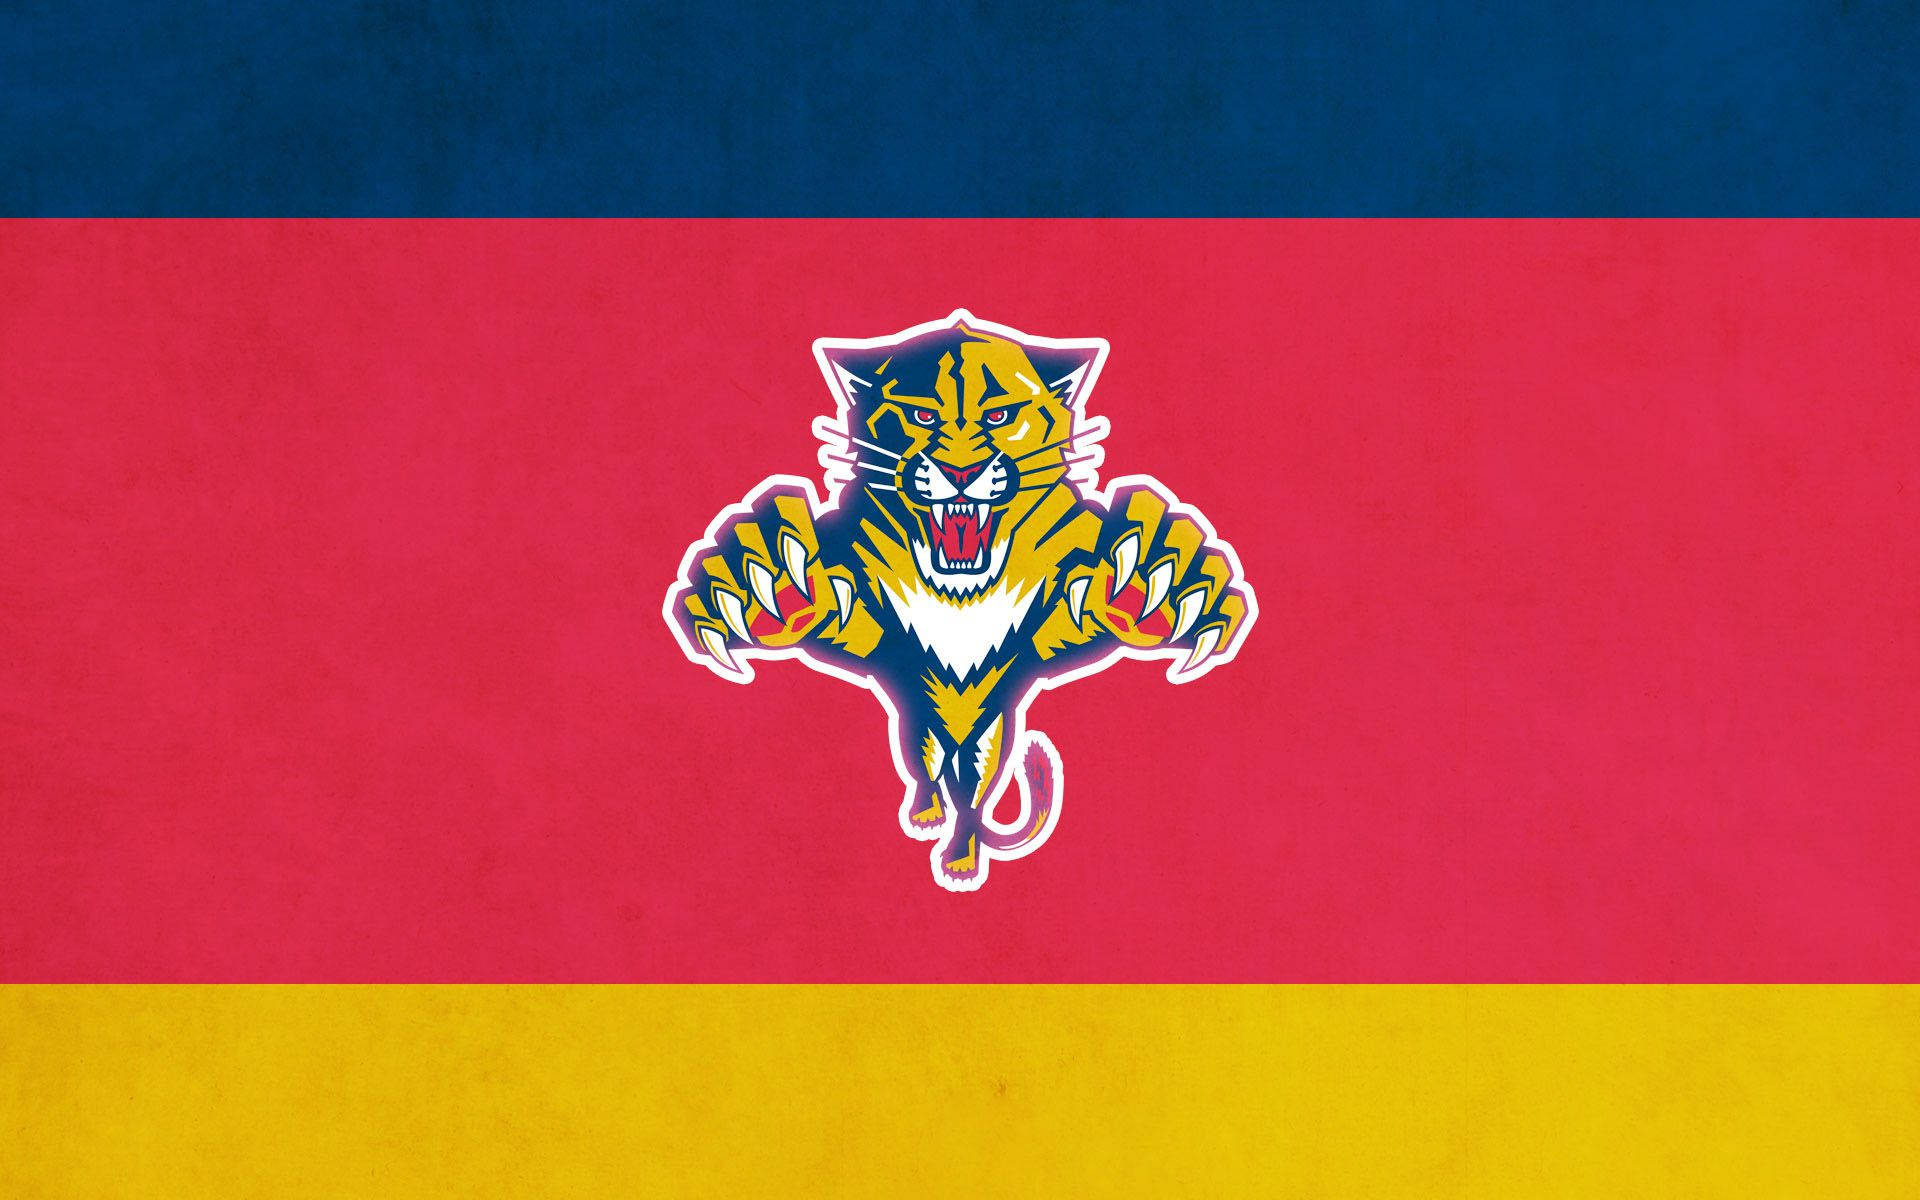 Florida Panthers Banner